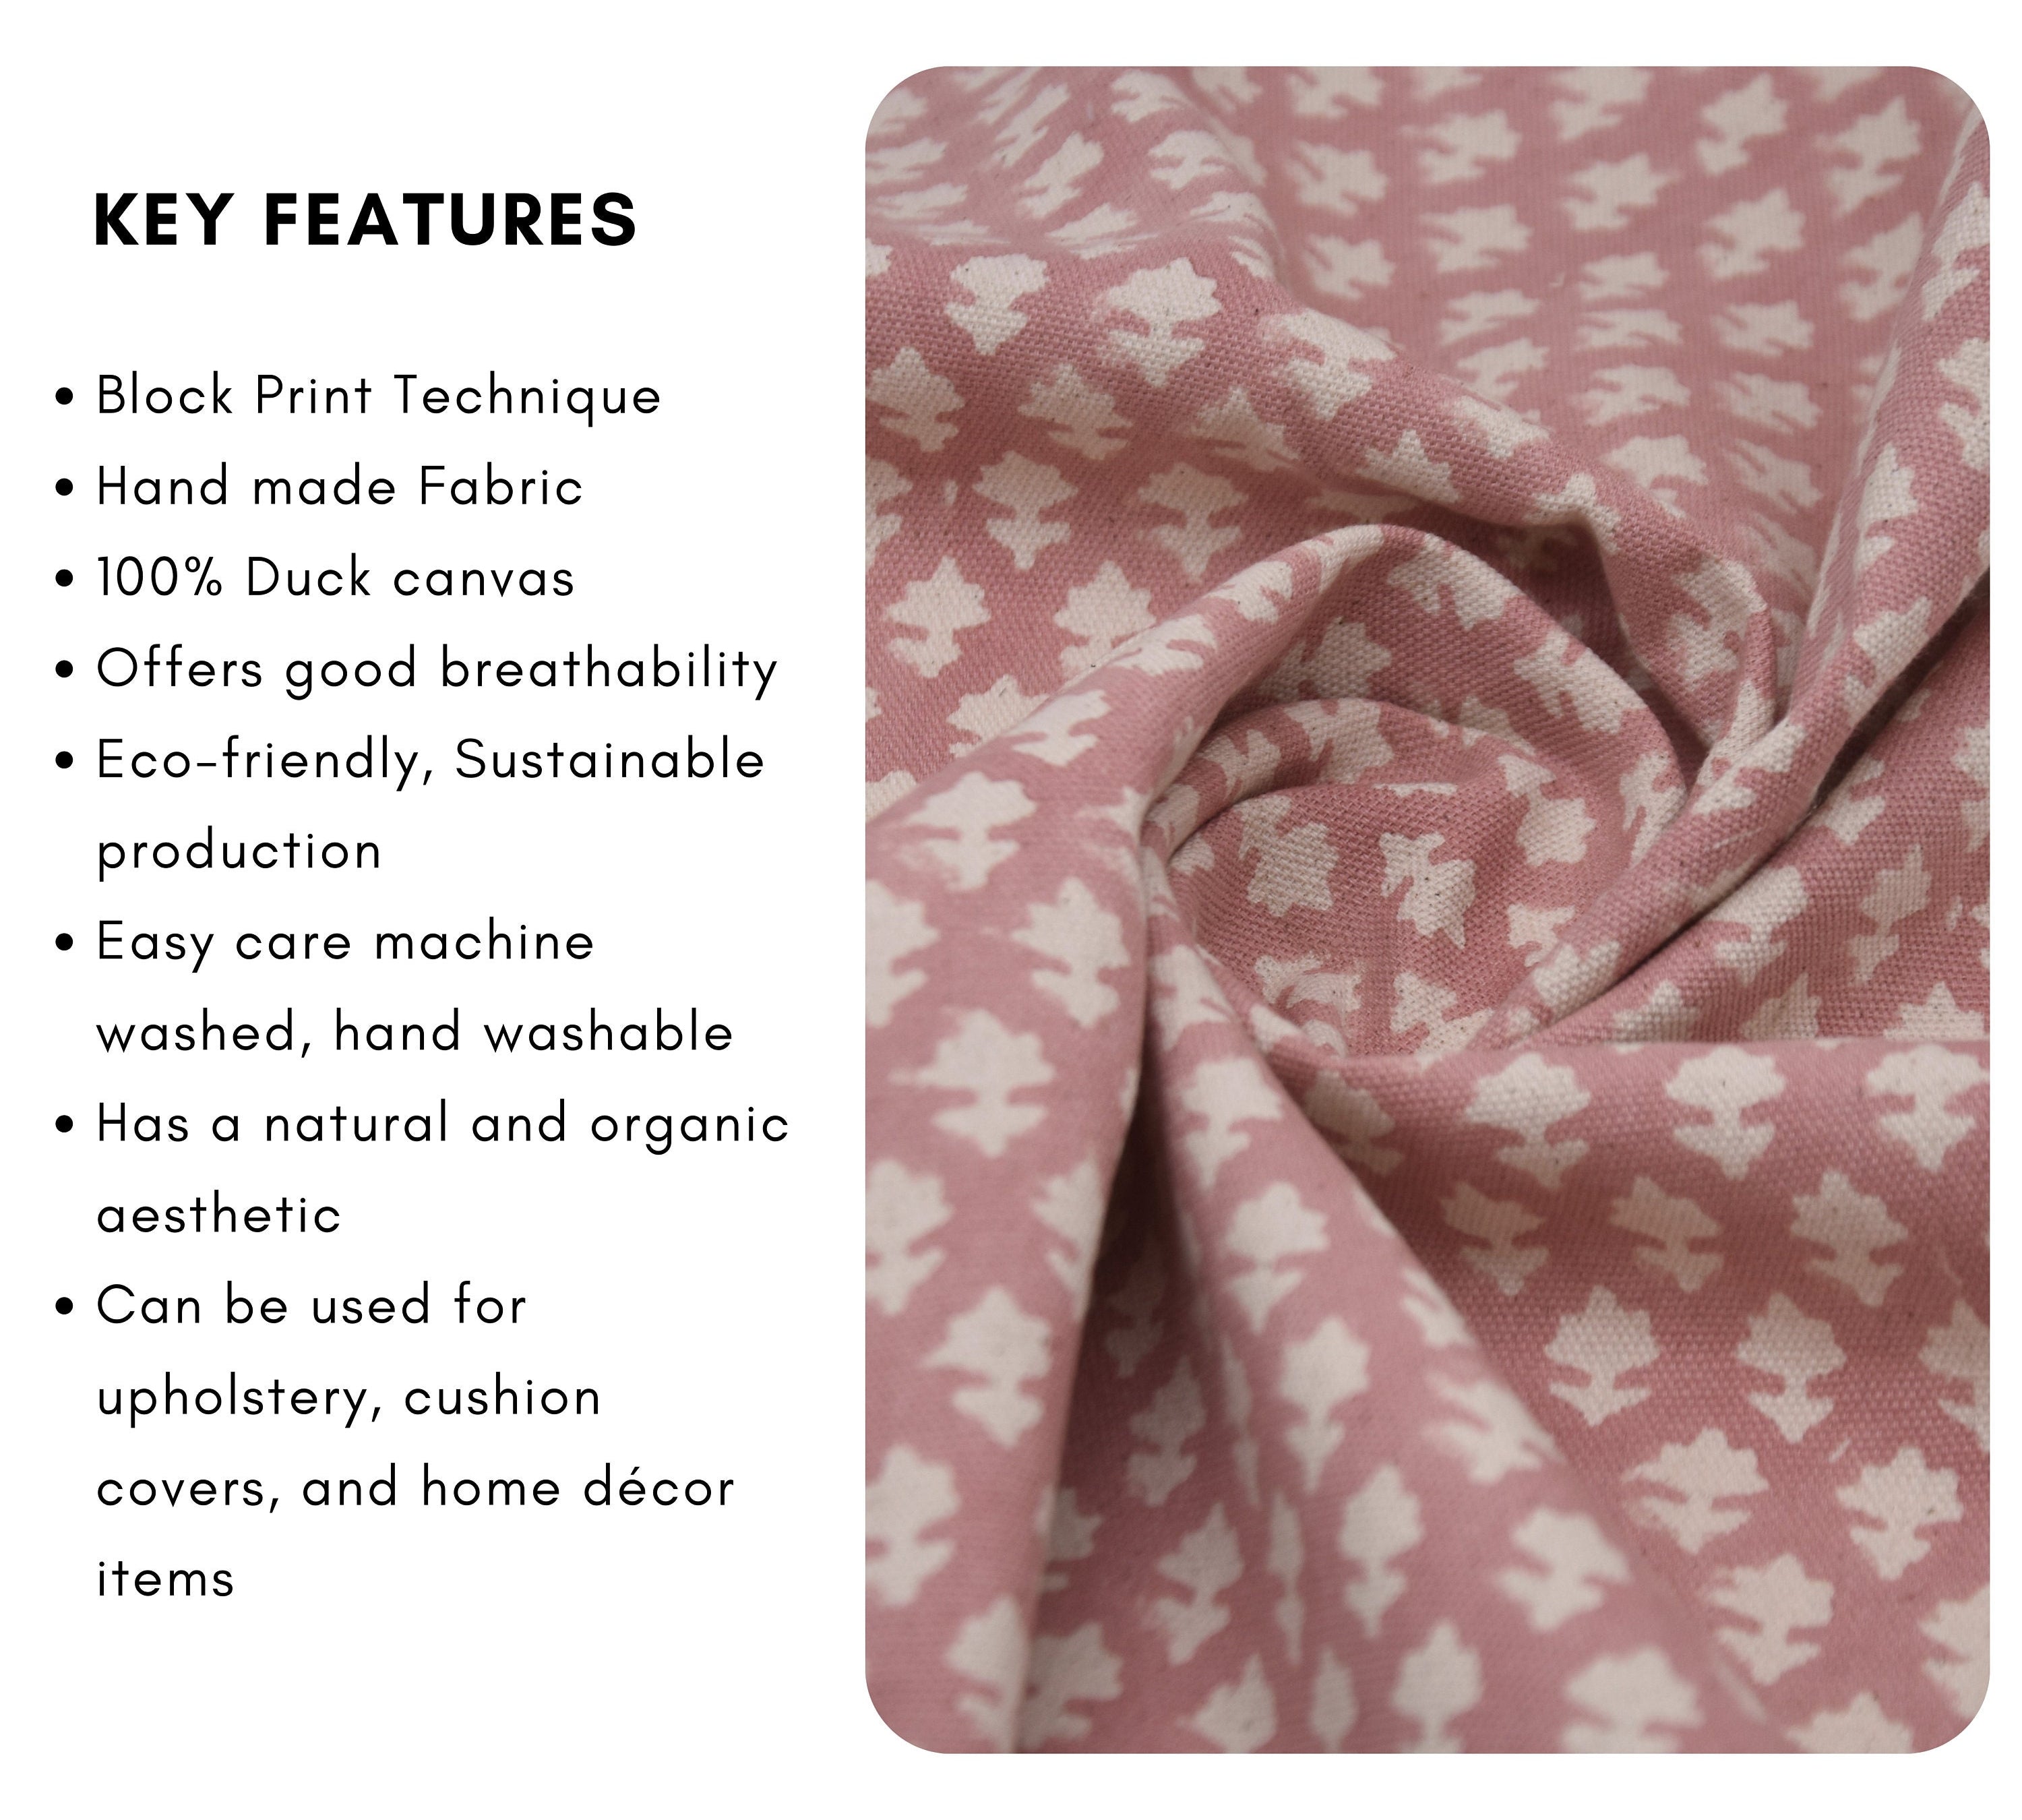 Handmade block print fabric, linen cotton, duck canvas 50" wide fabric, cotton quilt fabric, Indian block print - PINKCITY JAAL